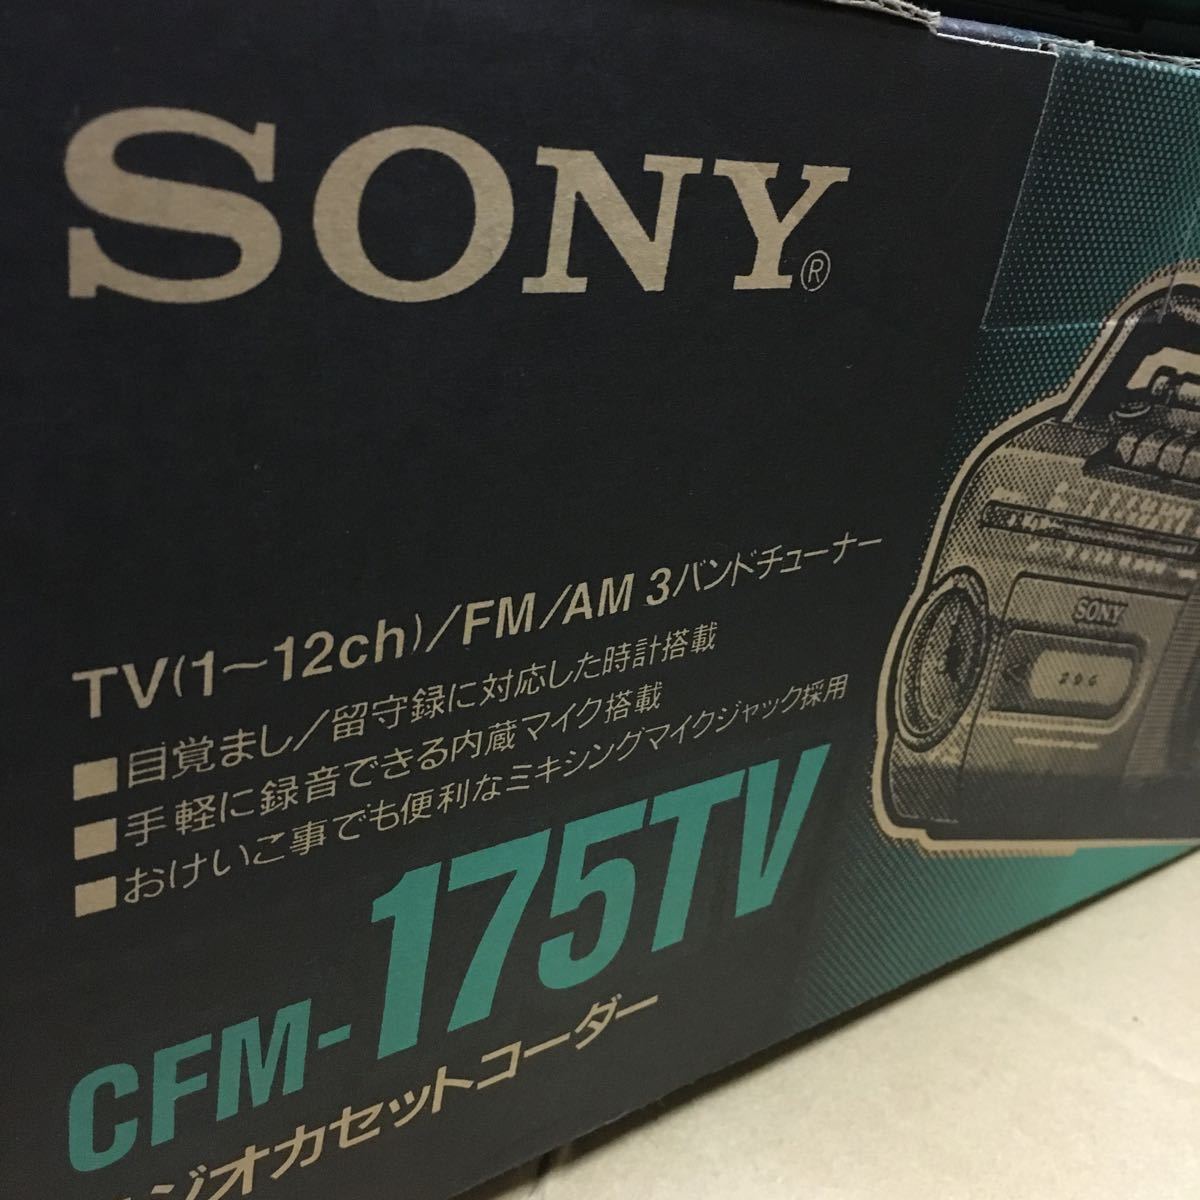  Sony SONY CFM-175TV black radio-cassette 